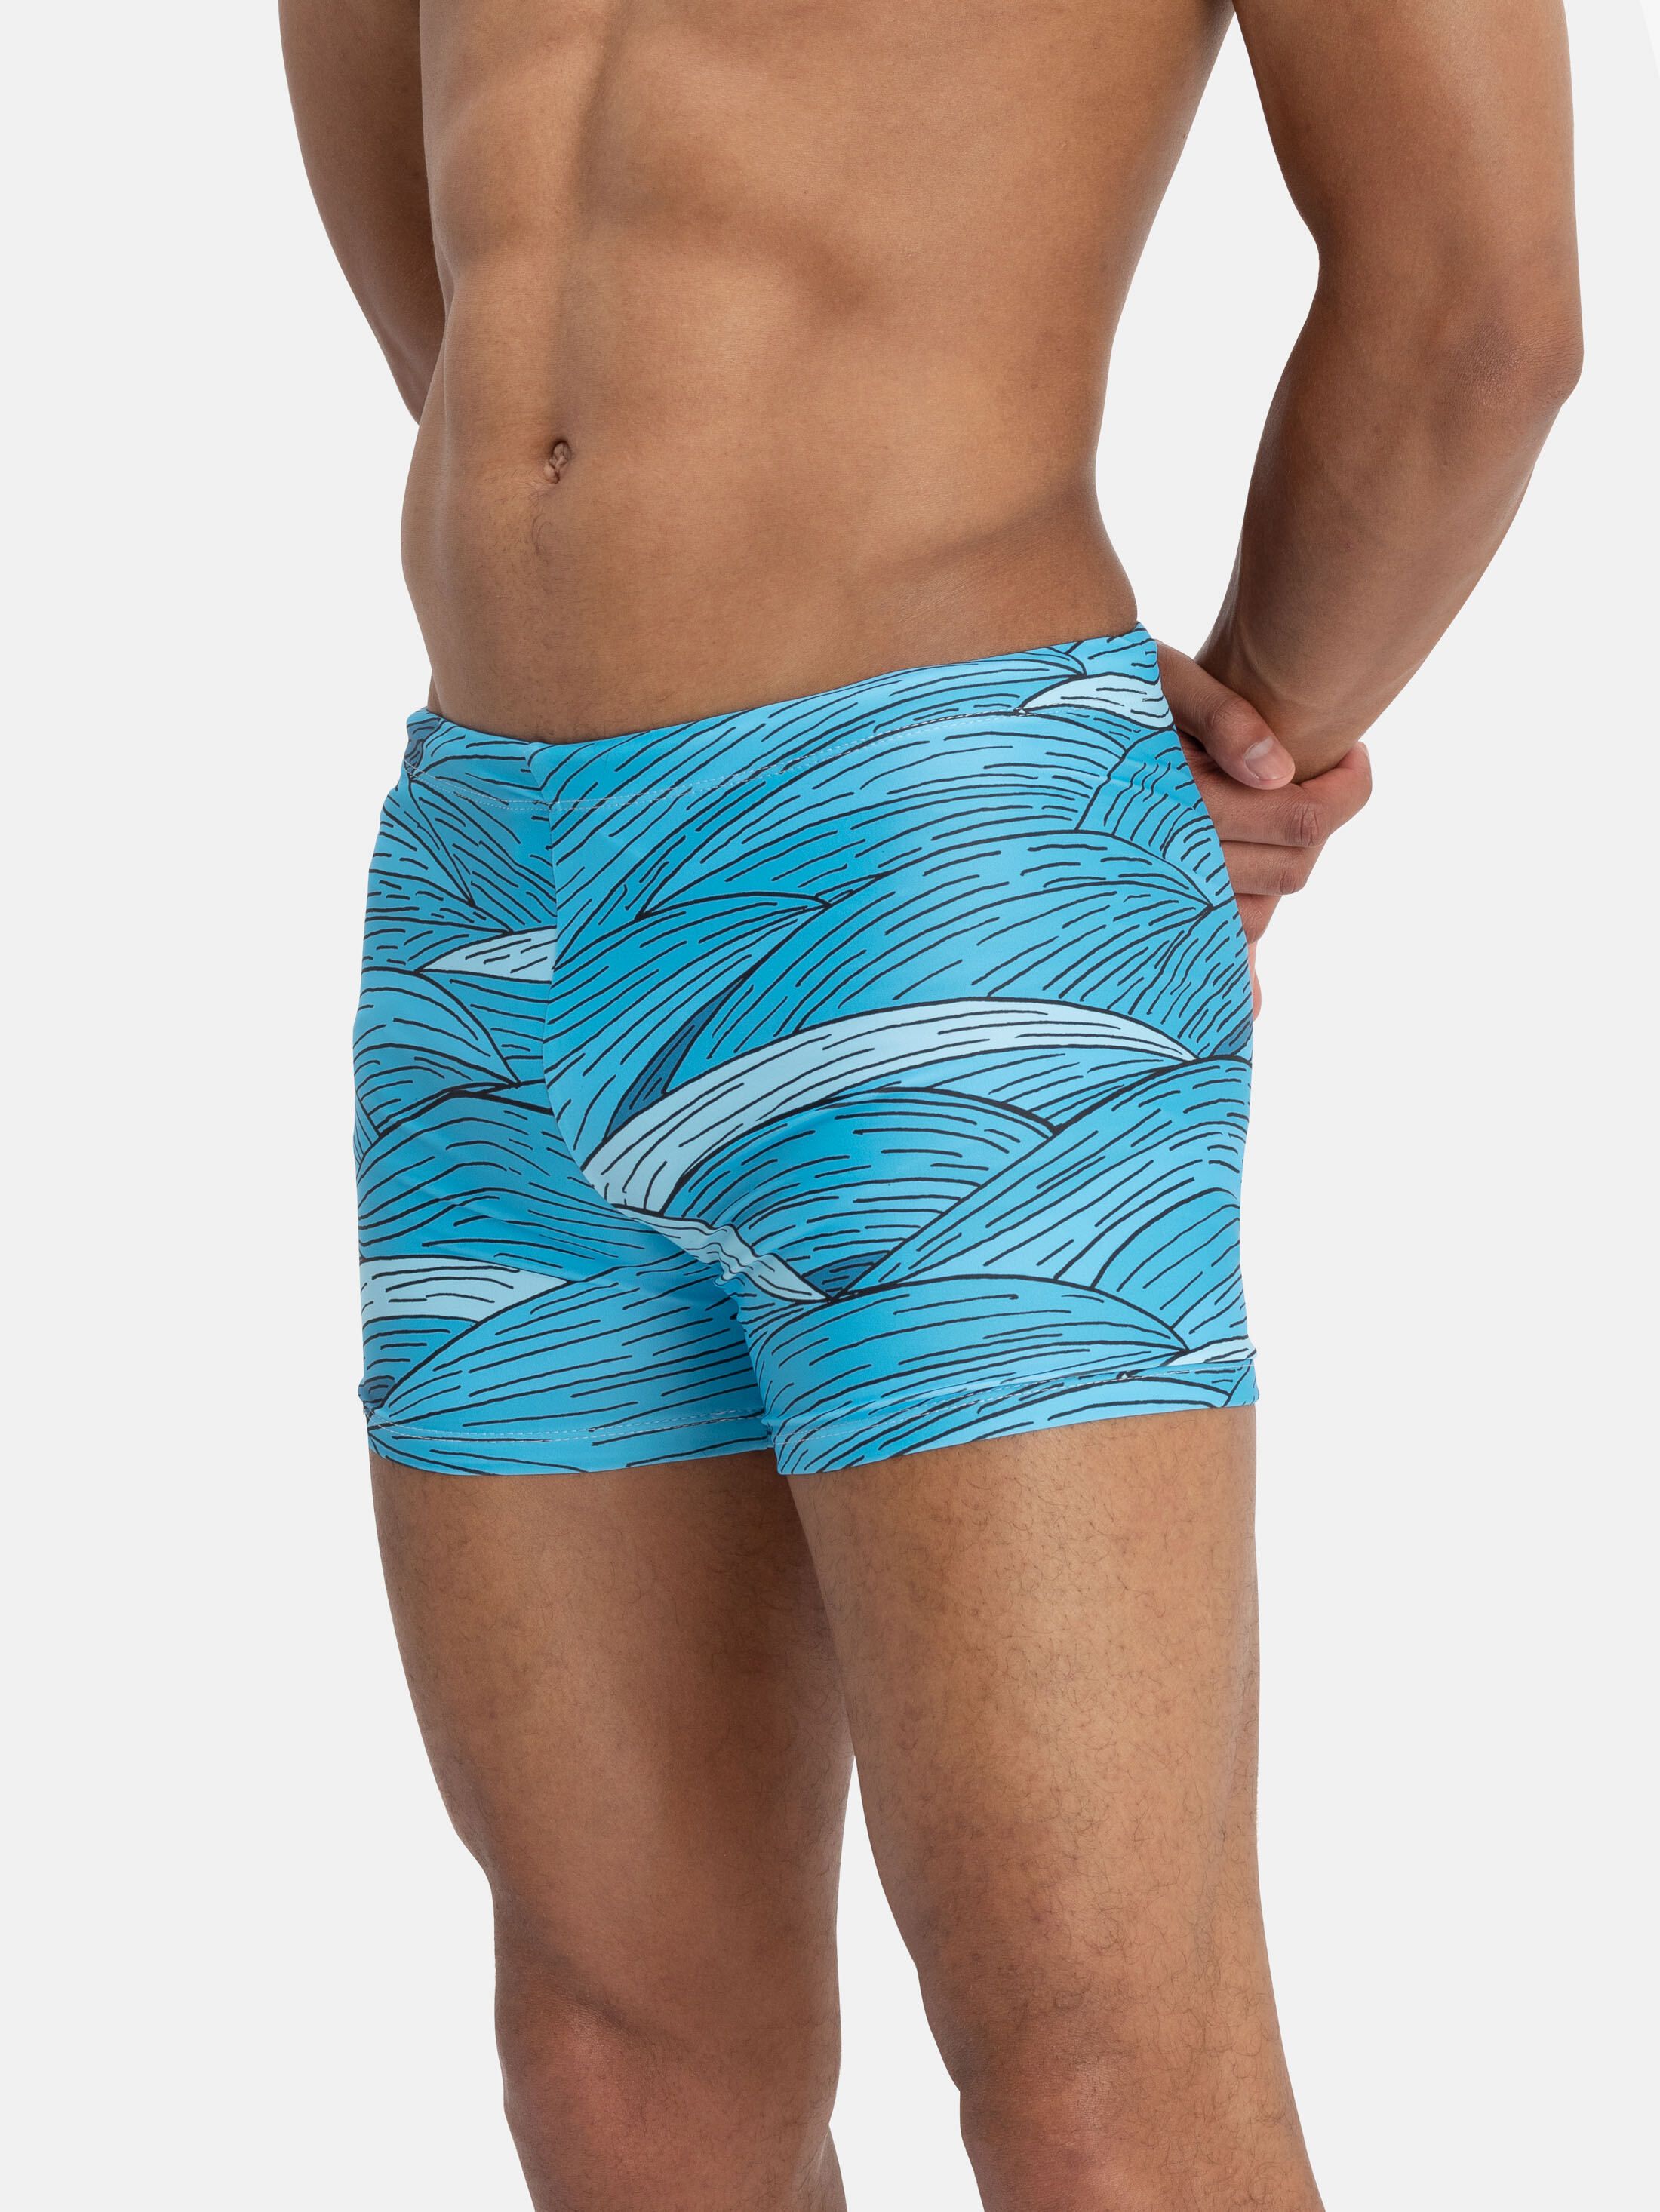 custom swimming trunks stitching details